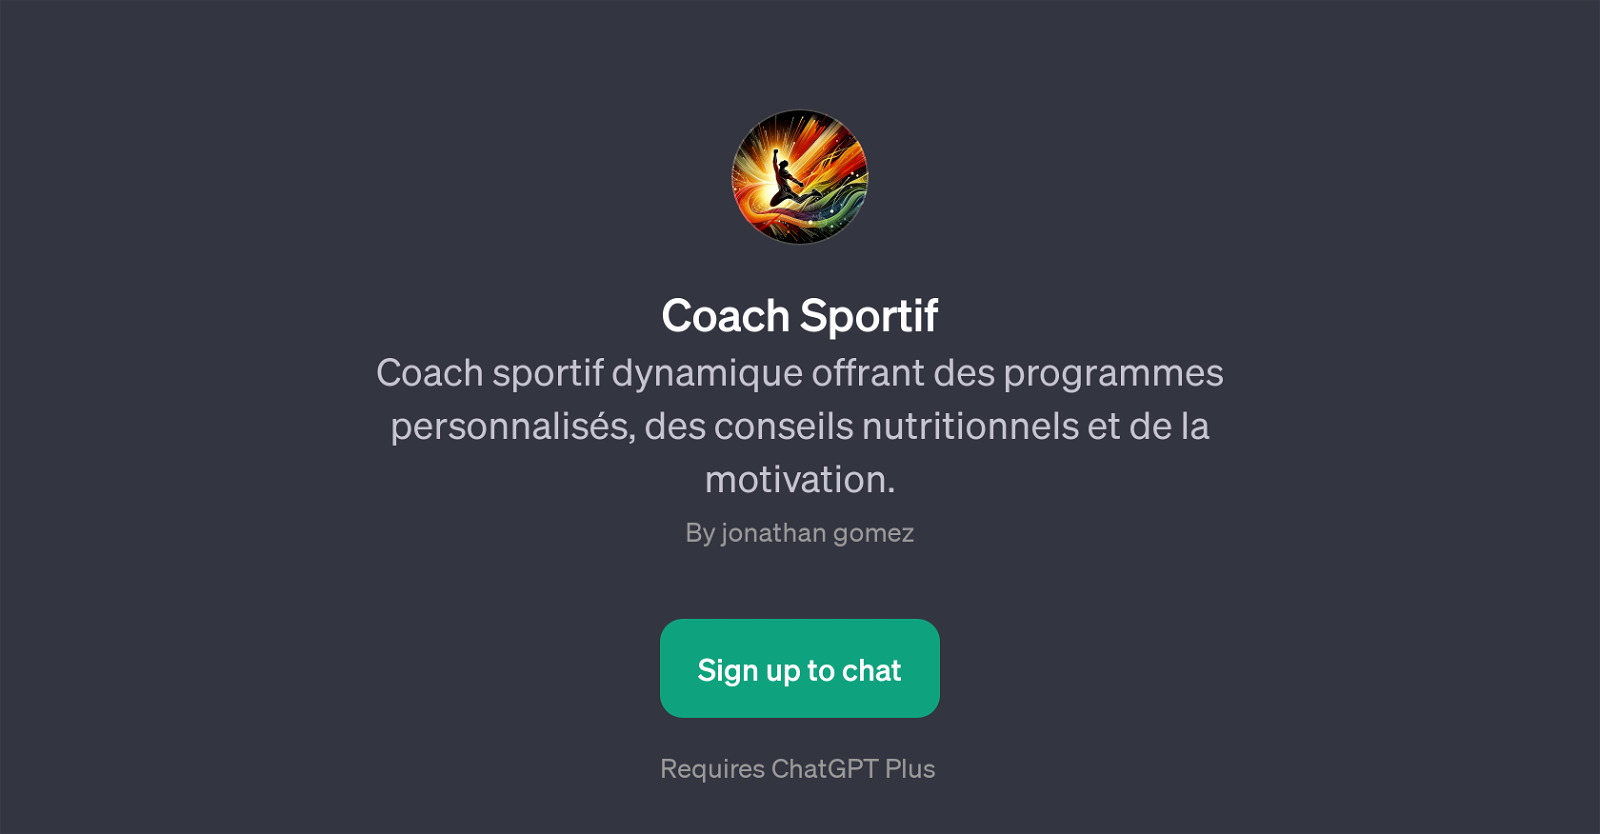 Coach Sportif website